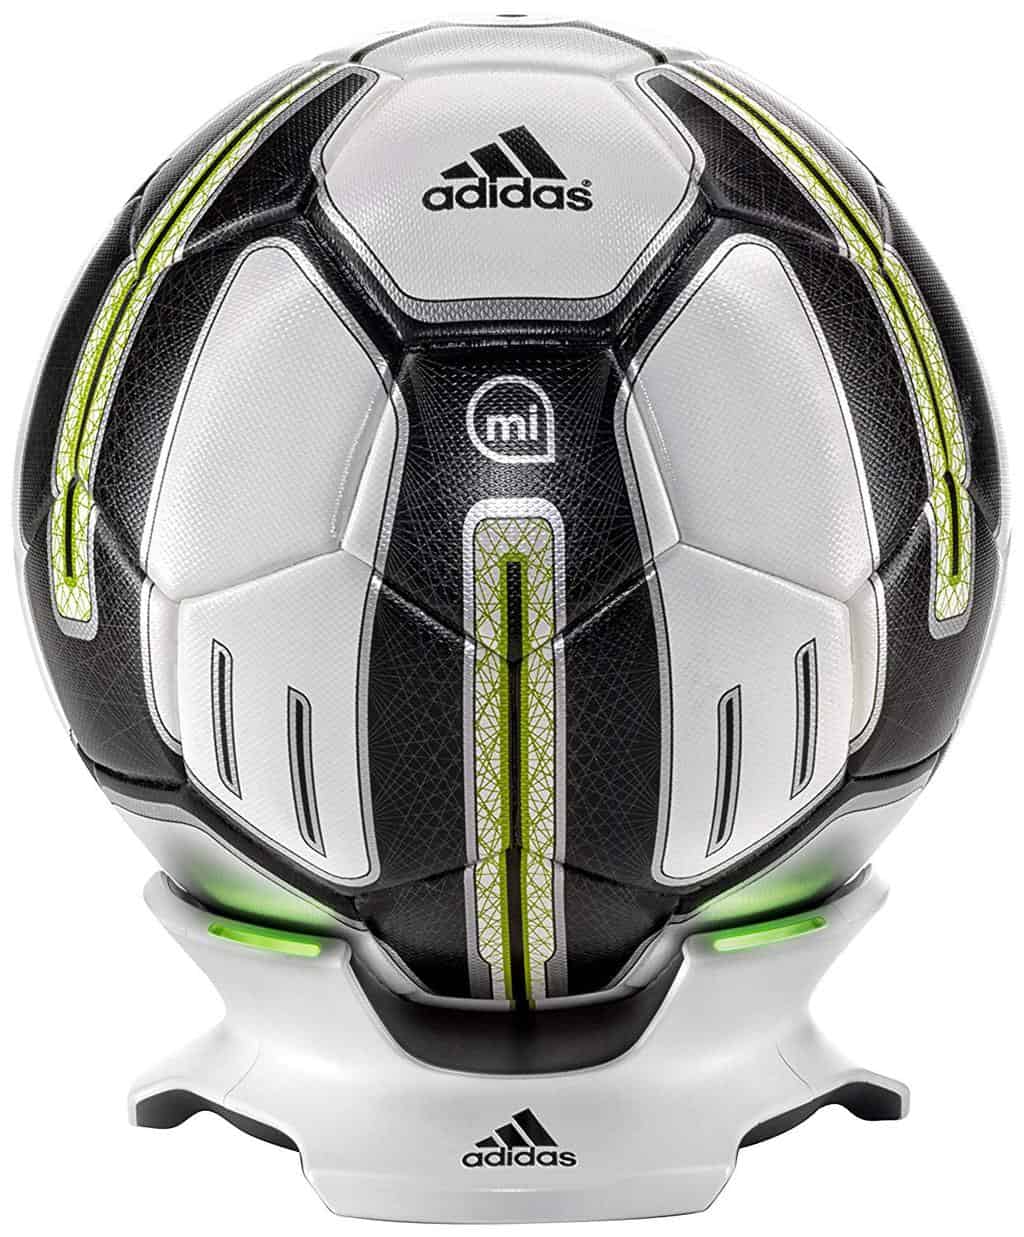 Adidas Smart Soccer Ball Review 2019 